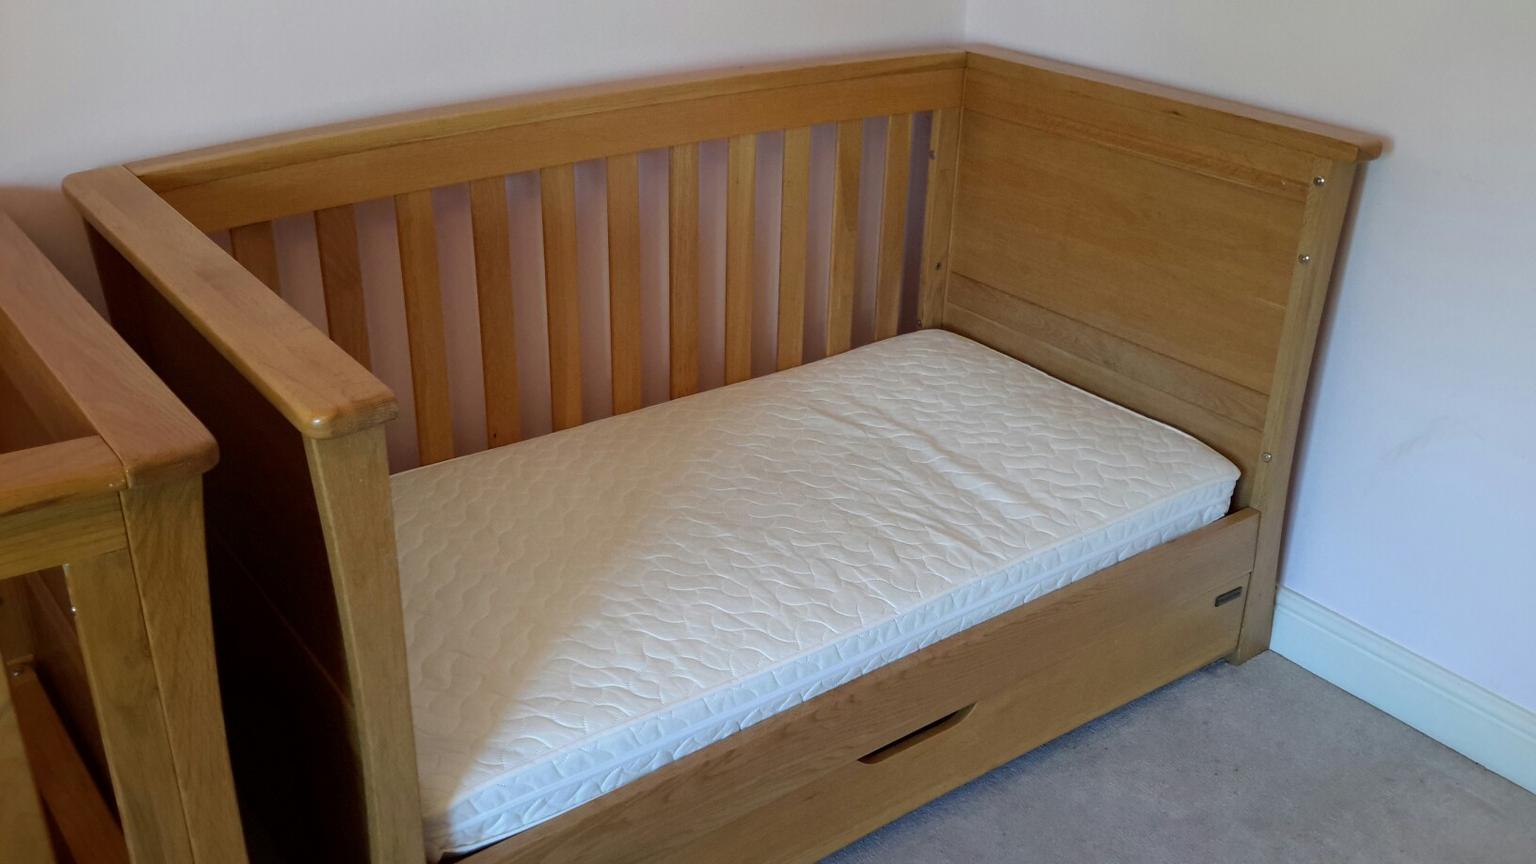 mamas and papas ocean cot bed dimensions